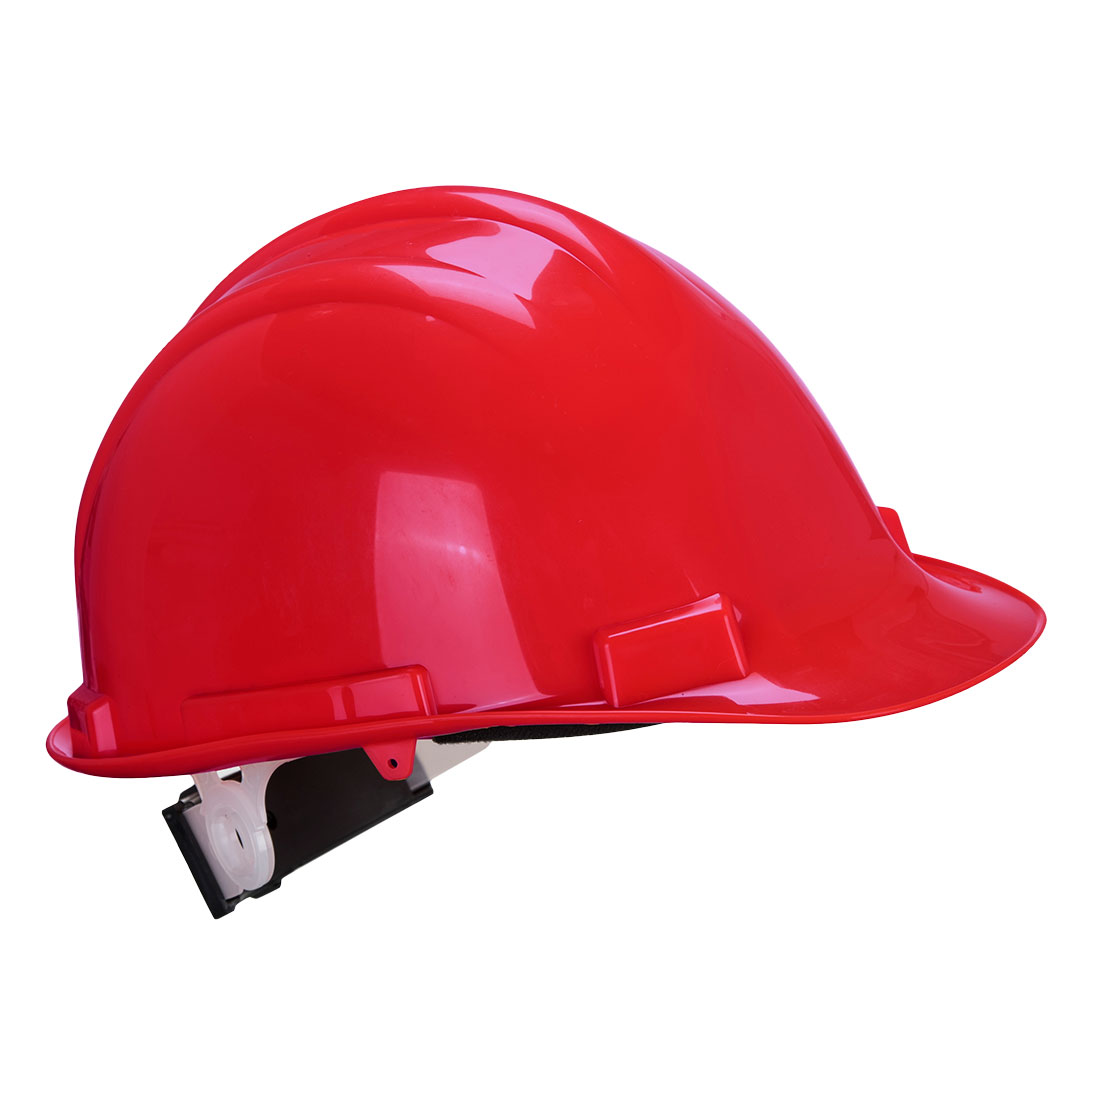 Expertbase Wheel Safety Helmet - Red